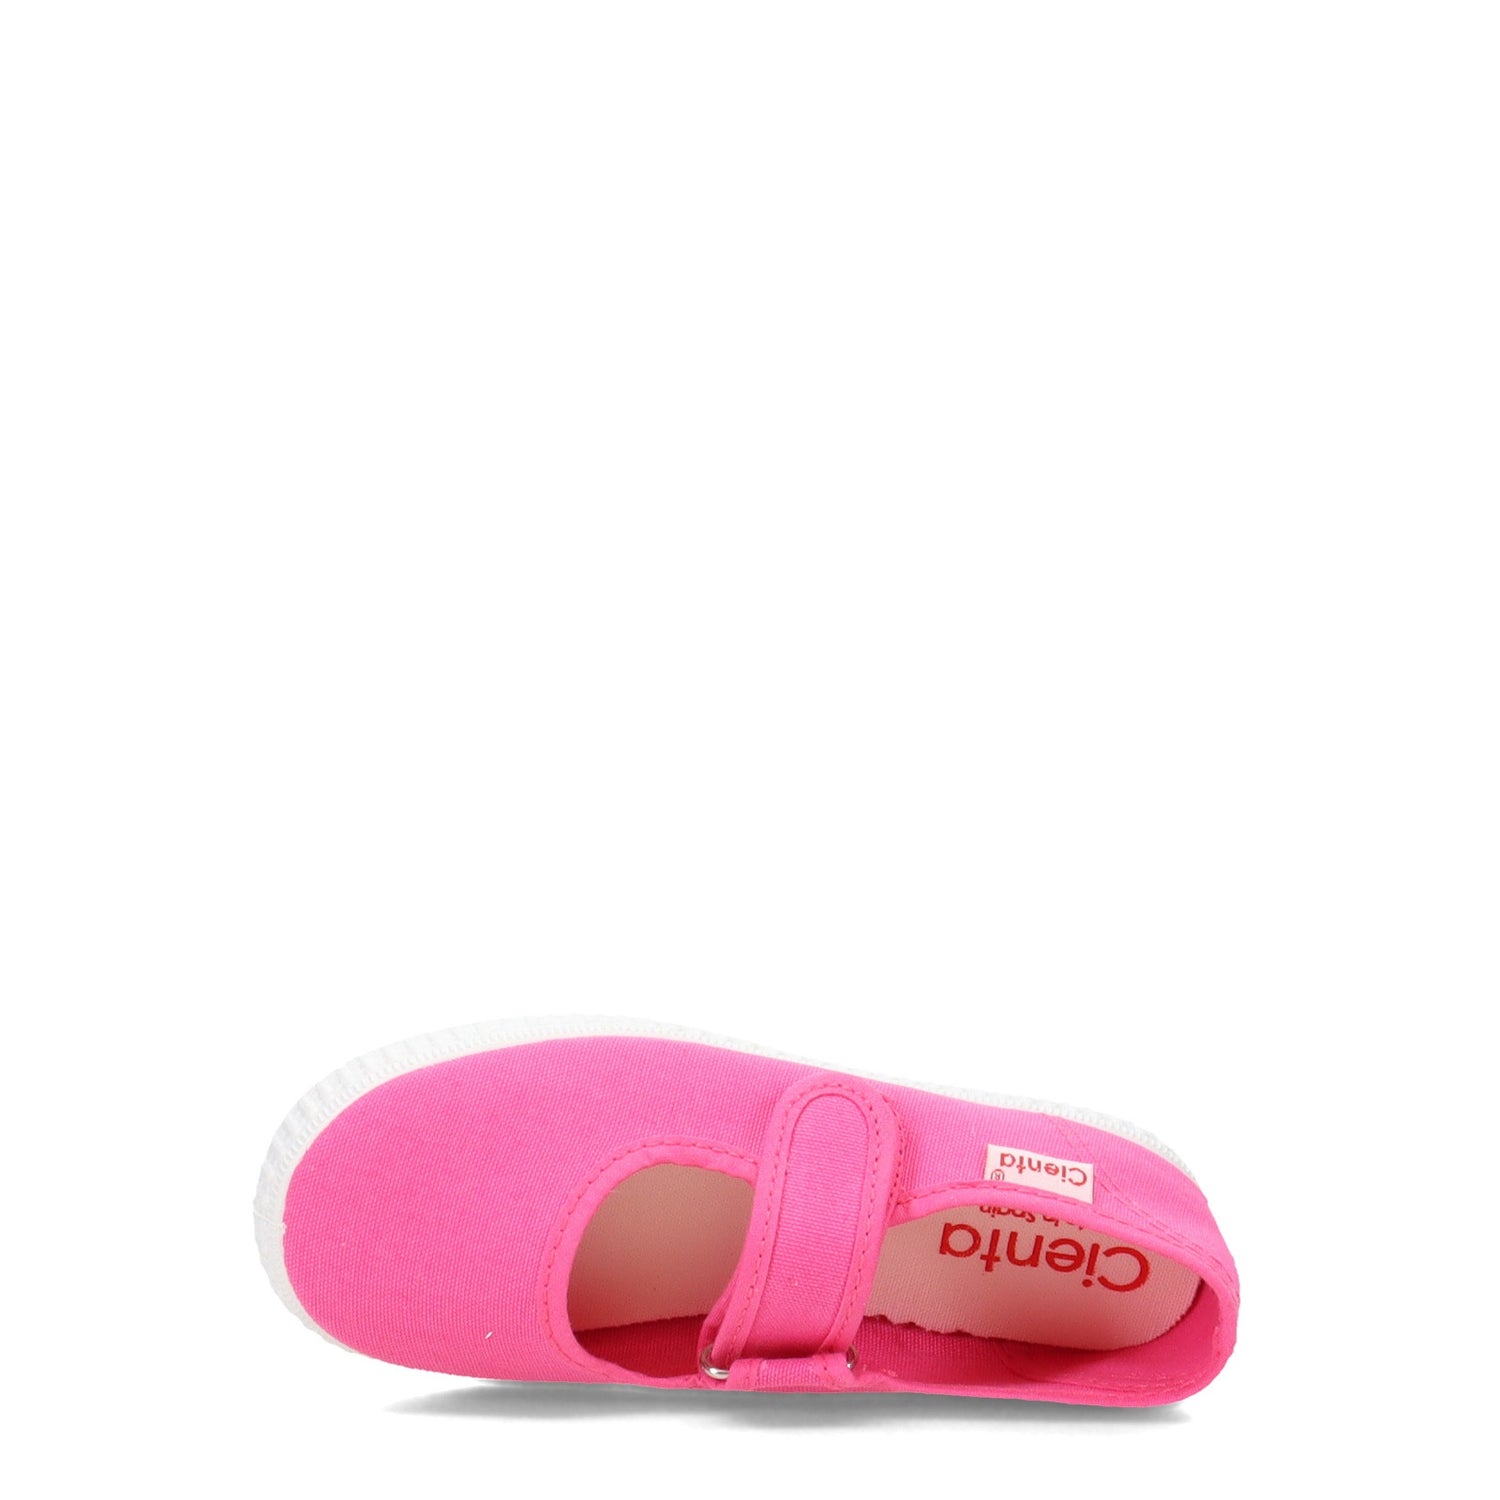 Peltz Shoes  Girl's Cienta Canvas Mary Jane Sneaker - Toddler & Little Kid PINK 56000.12